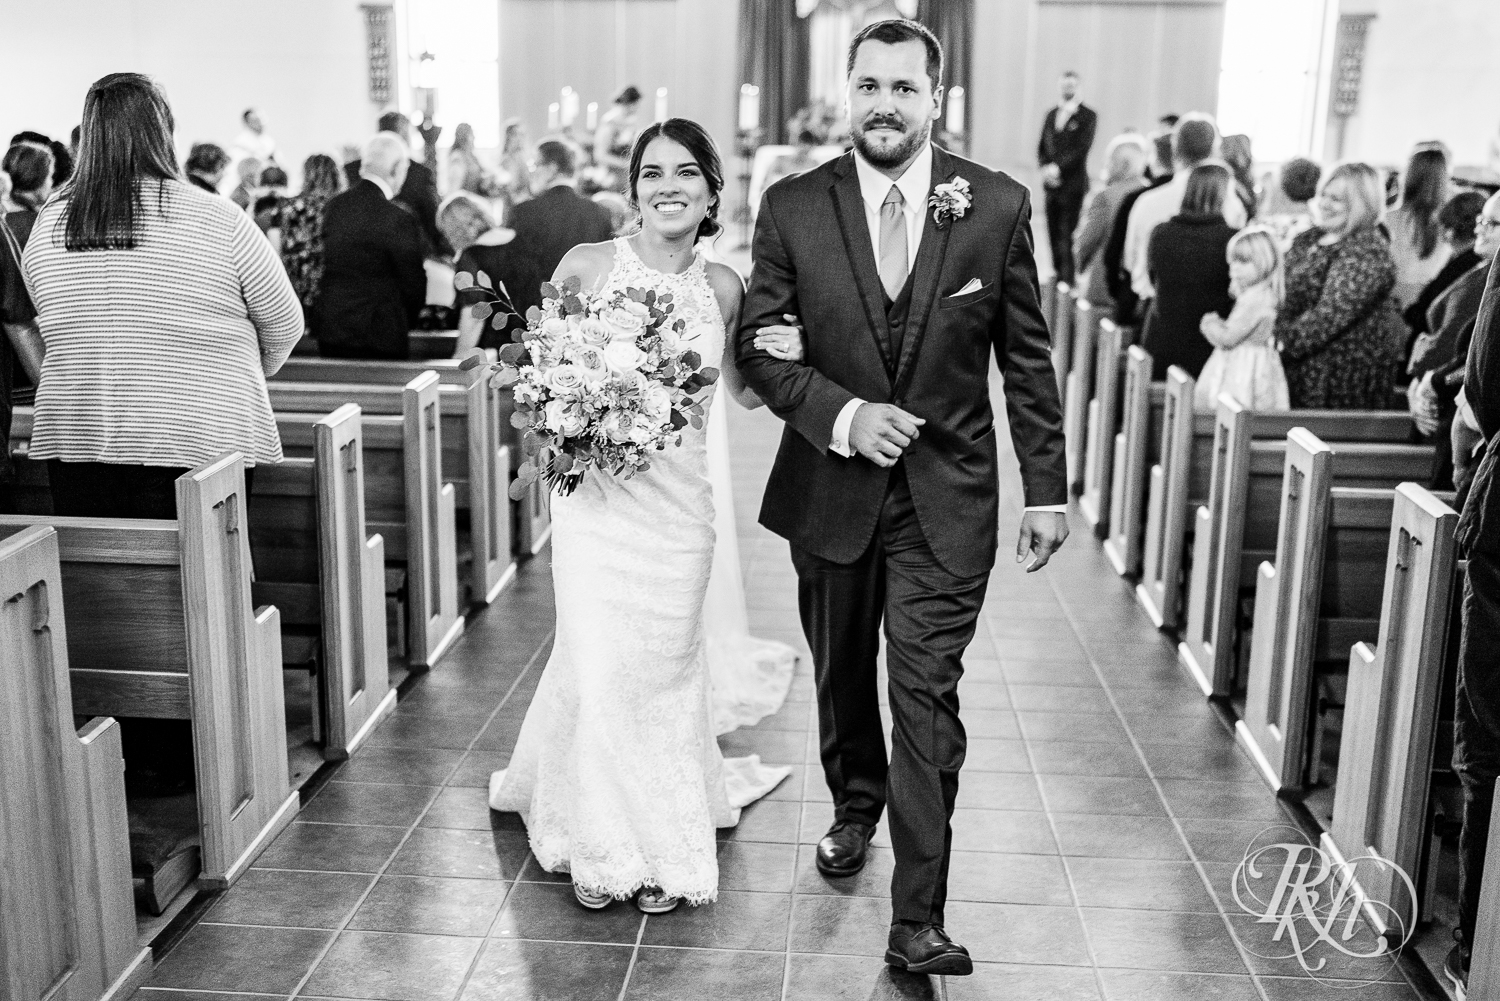 Bride and groom walking down the aisle at Catholic wedding ceremony at Saint Joseph Catholic Church in Rosemount, Minnesota.